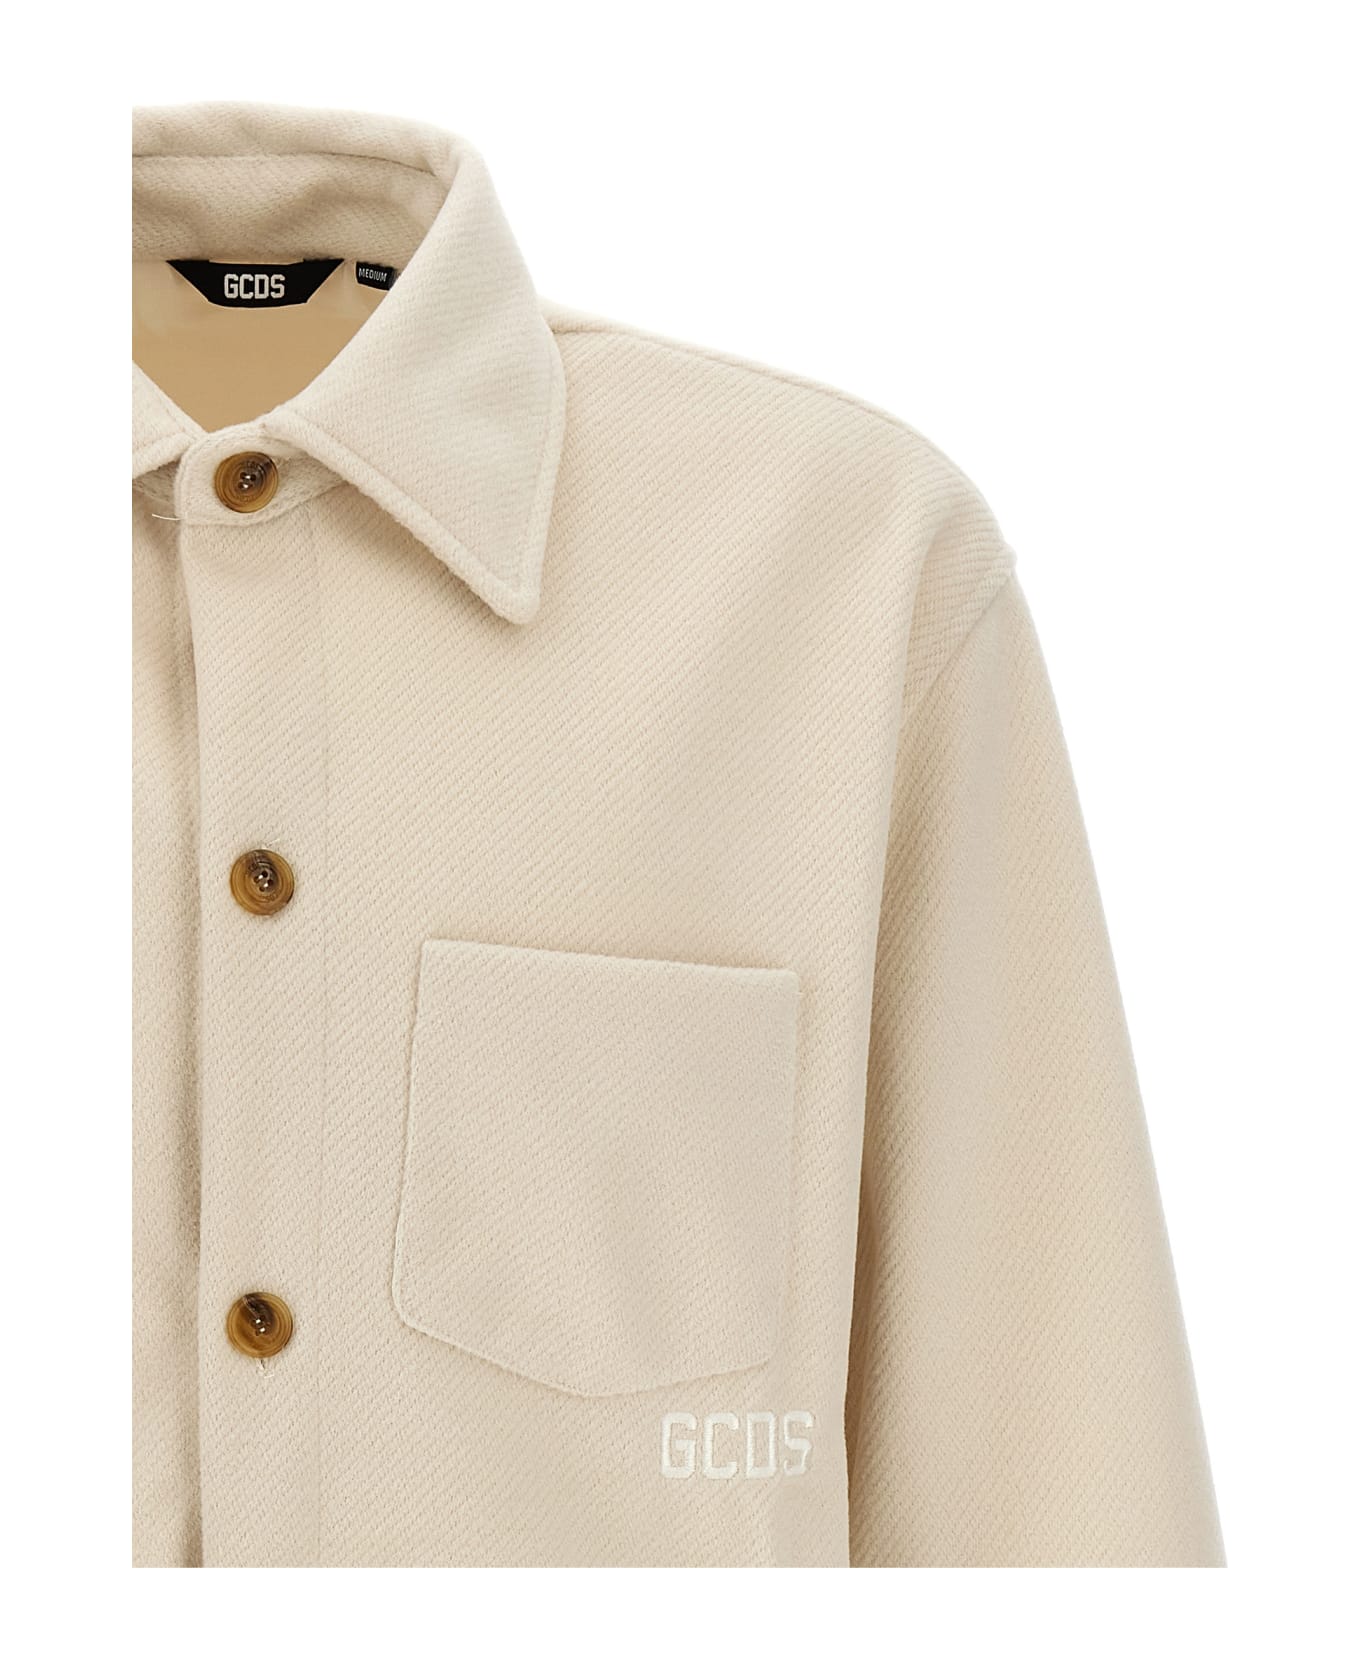 GCDS Logo Embroidery Jacket - White